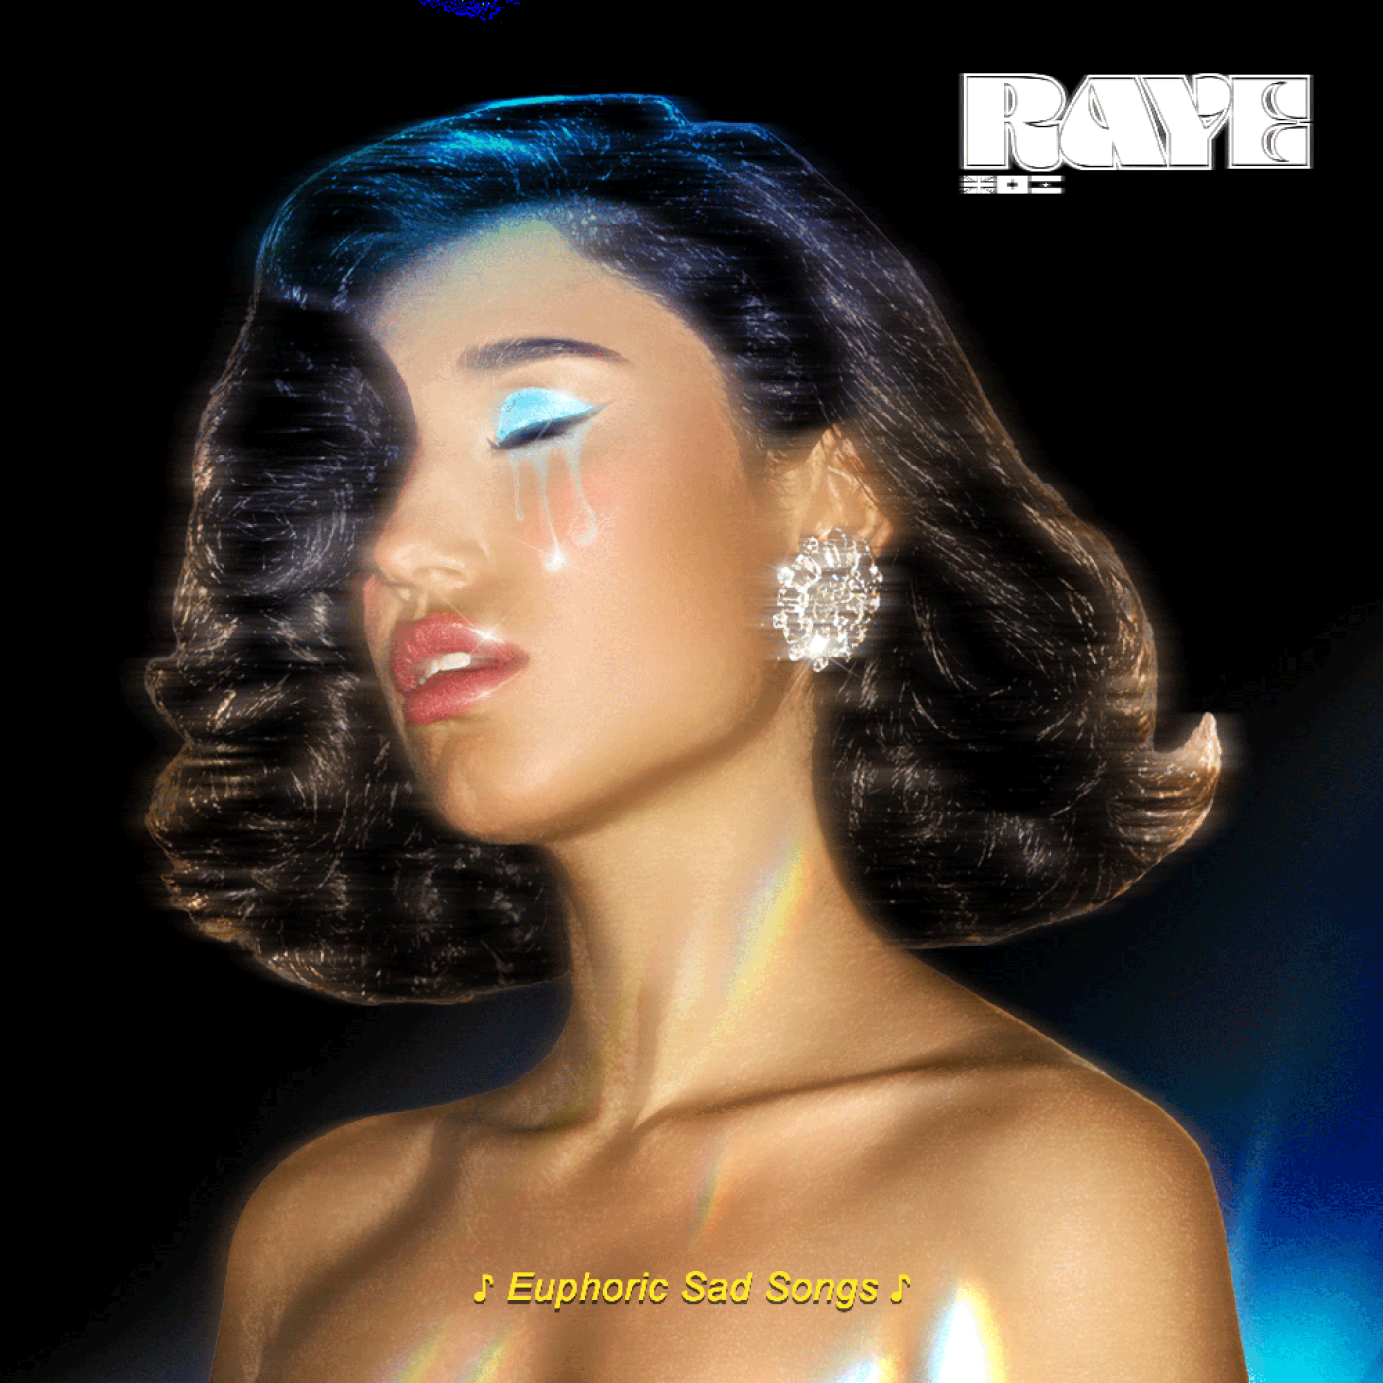 Euphoric Sad Songs - Raye (Album Cover Concept Design)